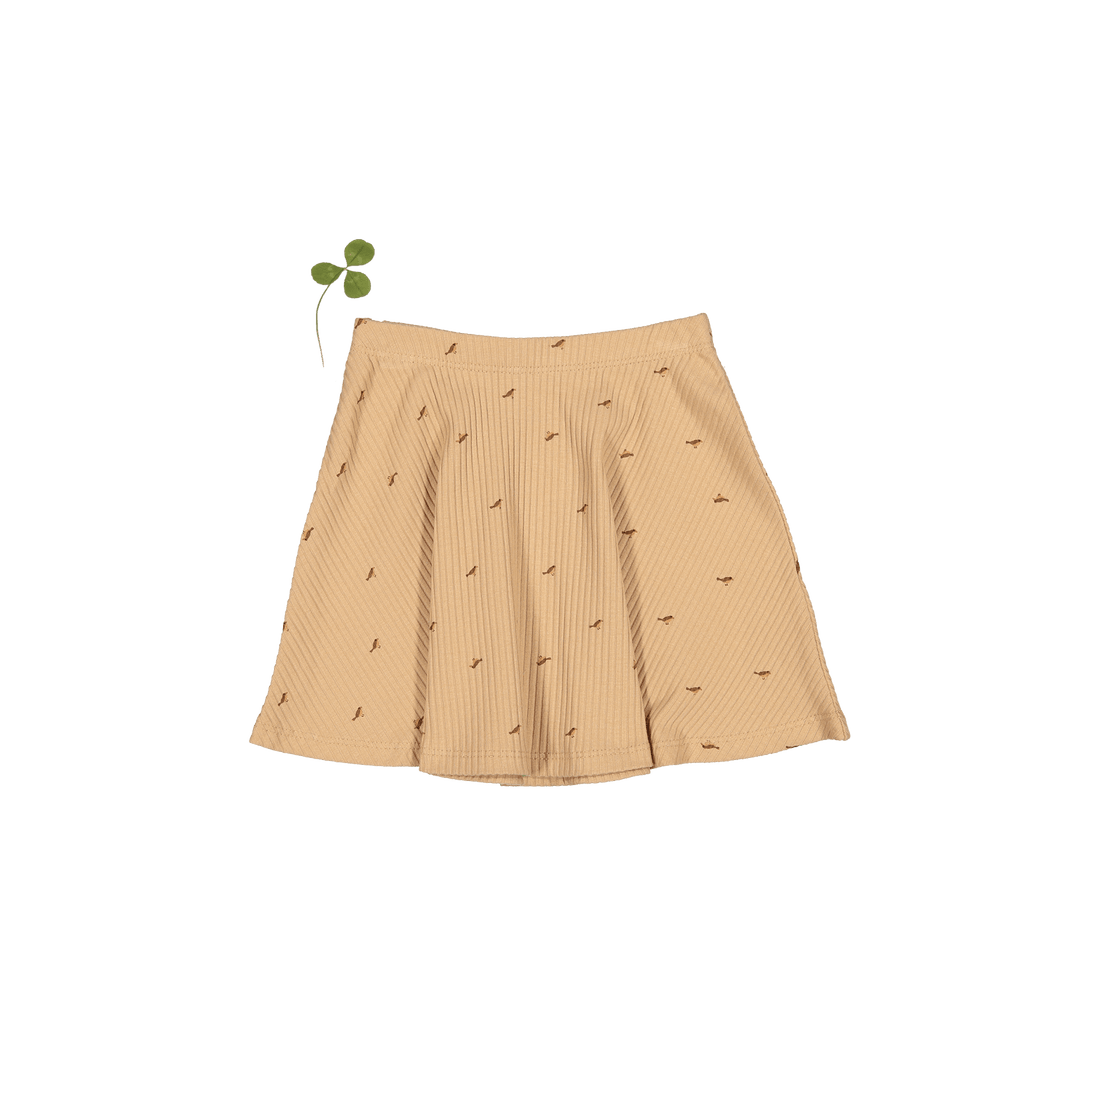 The Printed Skirt - Birdsong